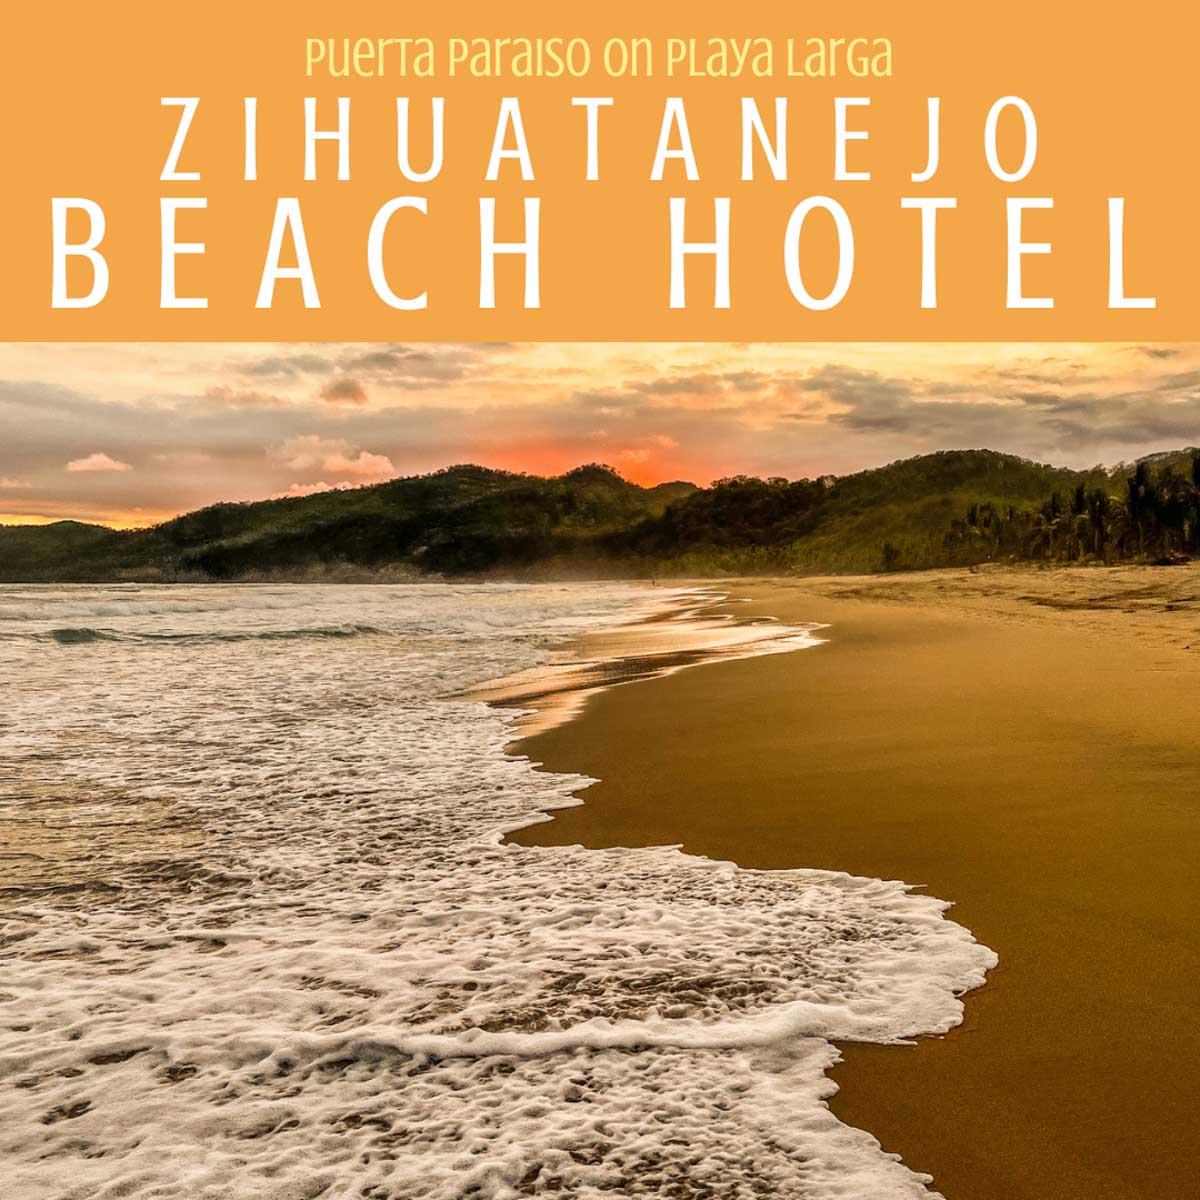 zihuatanejo mexico beach hotel playa larga zihuatanejo (Instagram Post)LR